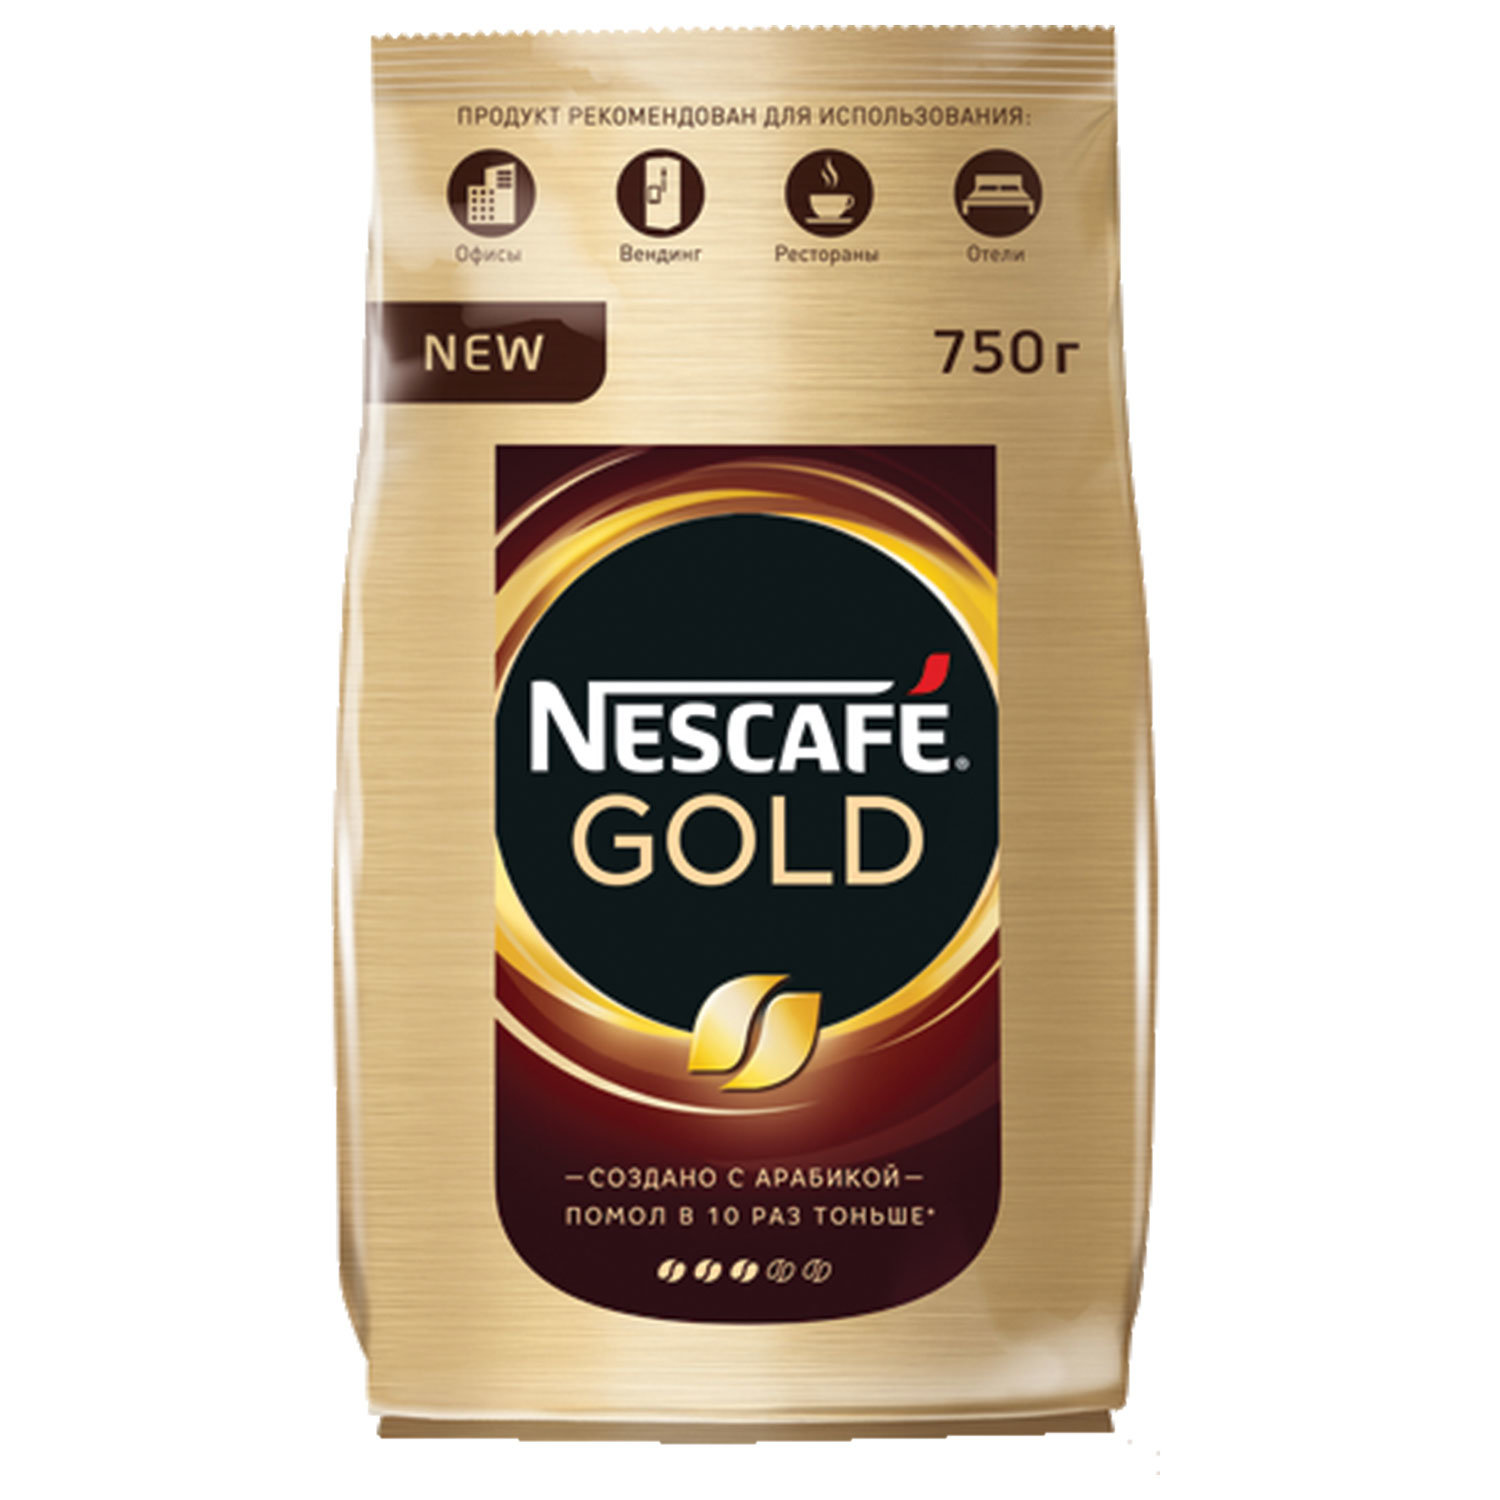 Упаковка кофе нескафе. Nescafe кофе Gold 900г.. Кофе Нескафе Голд 900 гр. Nescafe Gold 750 гр. Кофе "Nescafe Gold", 750 гр..